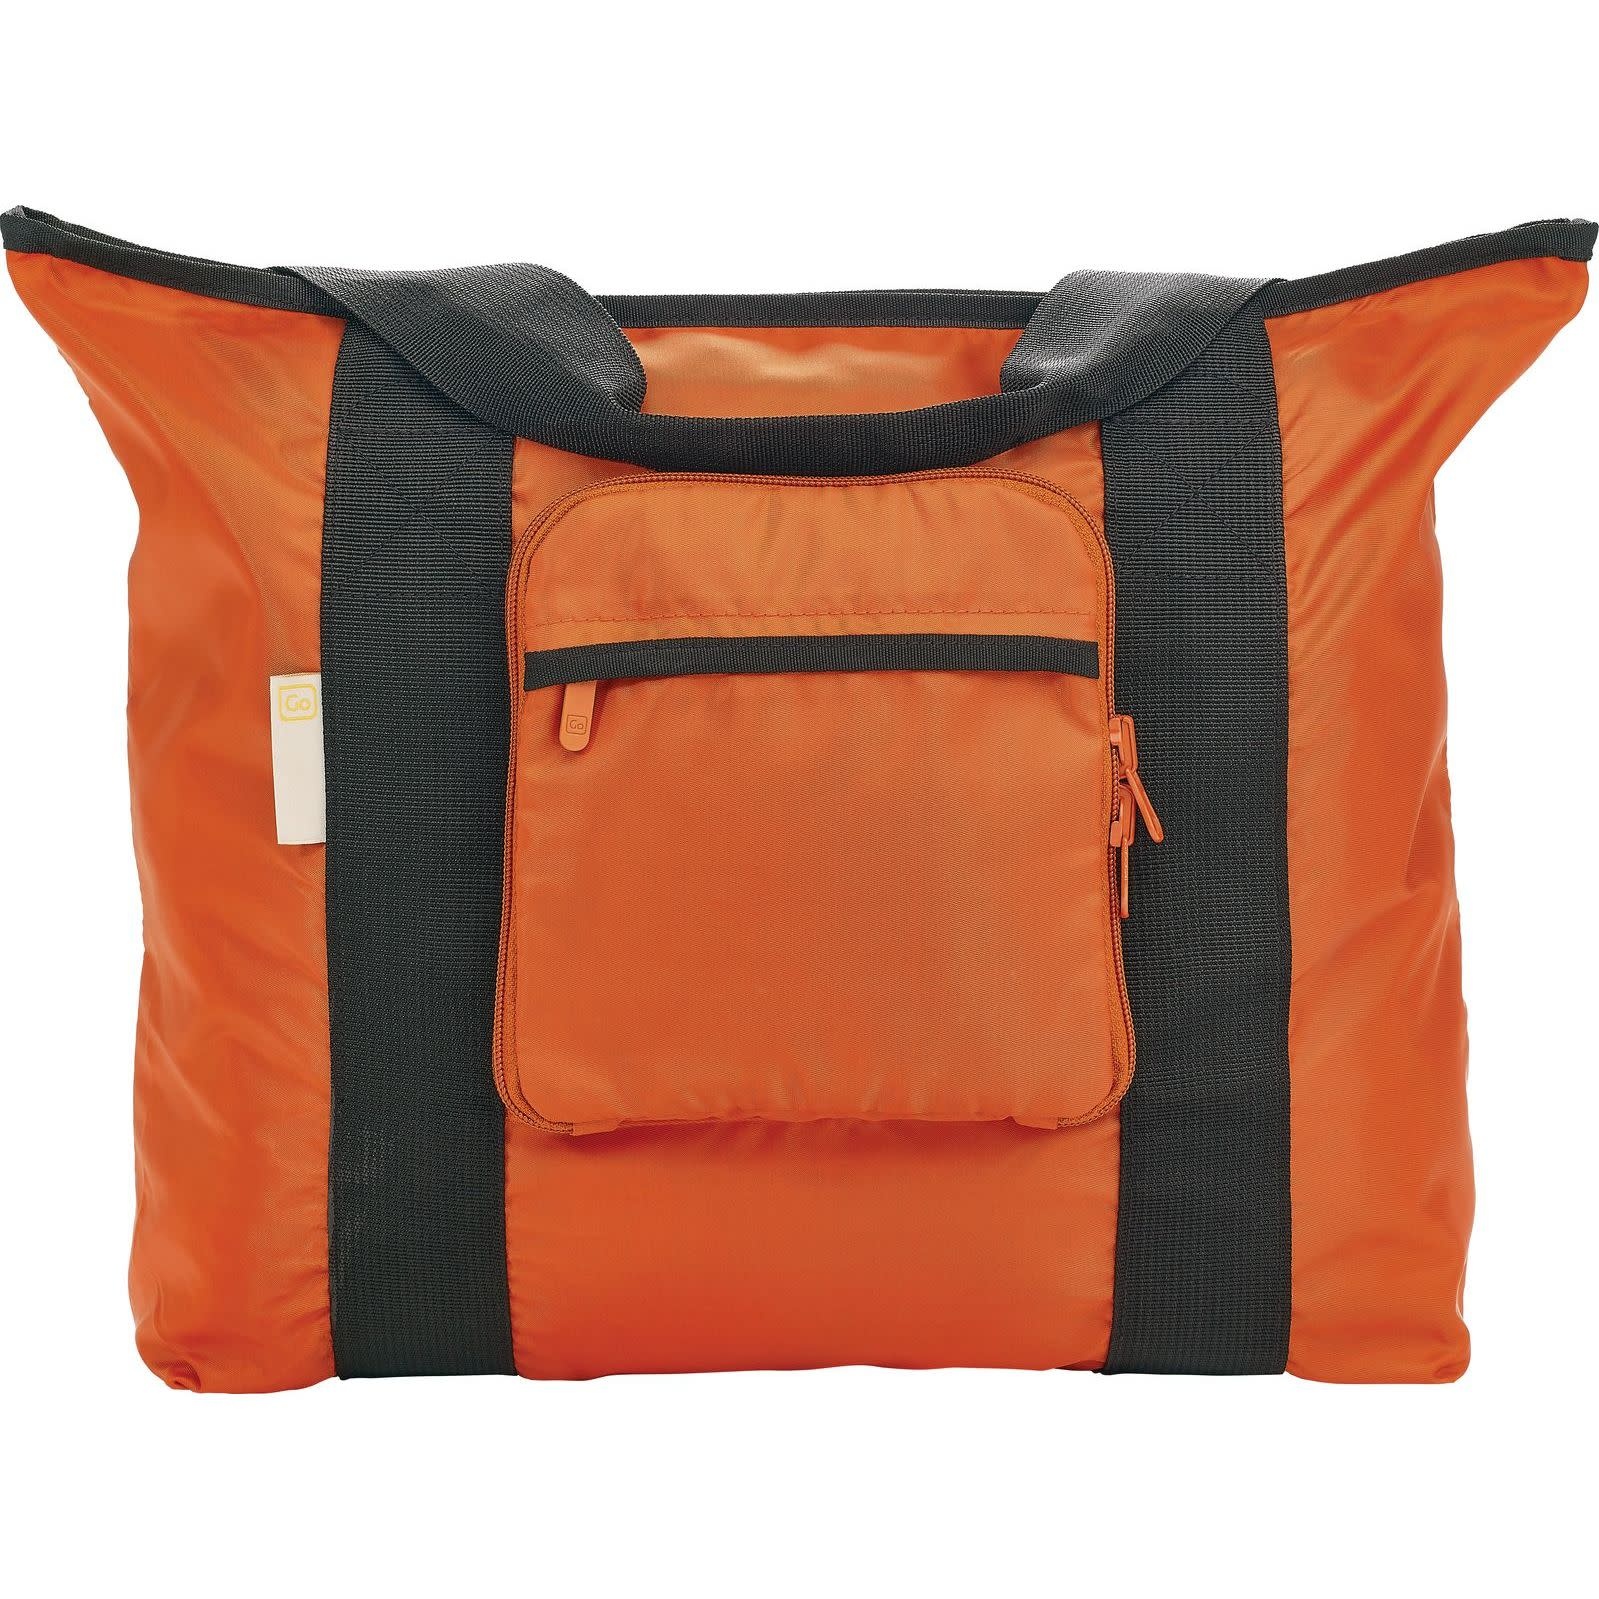 Go Travel Light Tote Bag-Orange - Just Bags Luggage Center